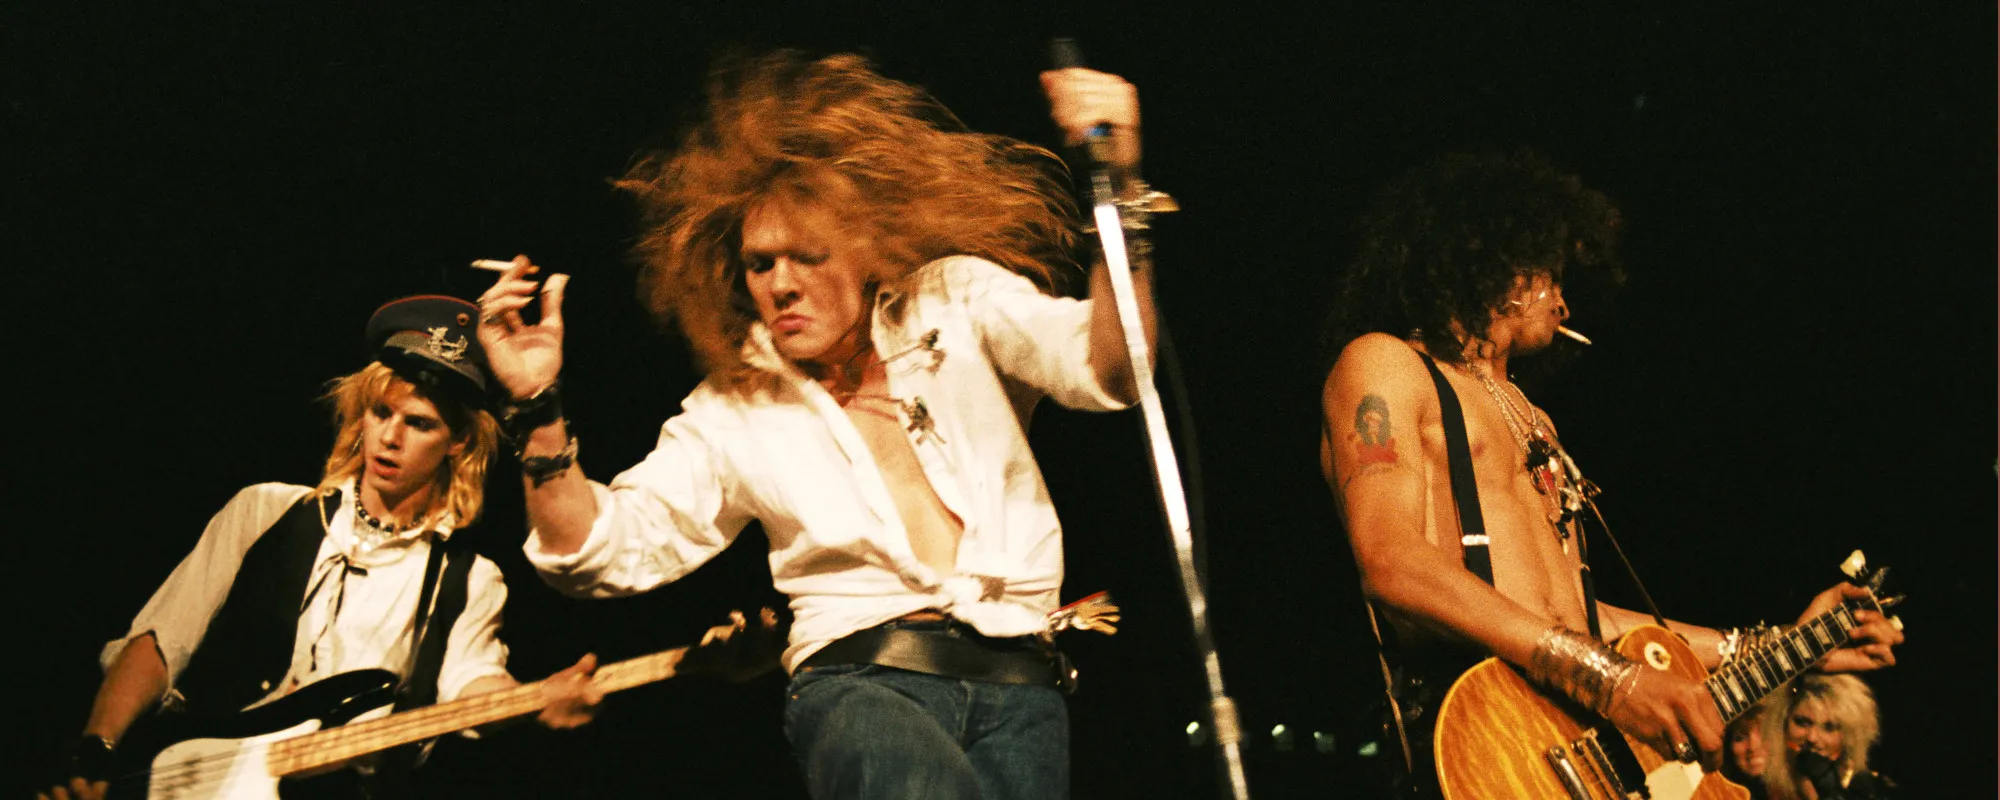 Artist Who Created Guns N’ Roses’ Iconic ‘Appetite for Destruction’ Album Cover Dies